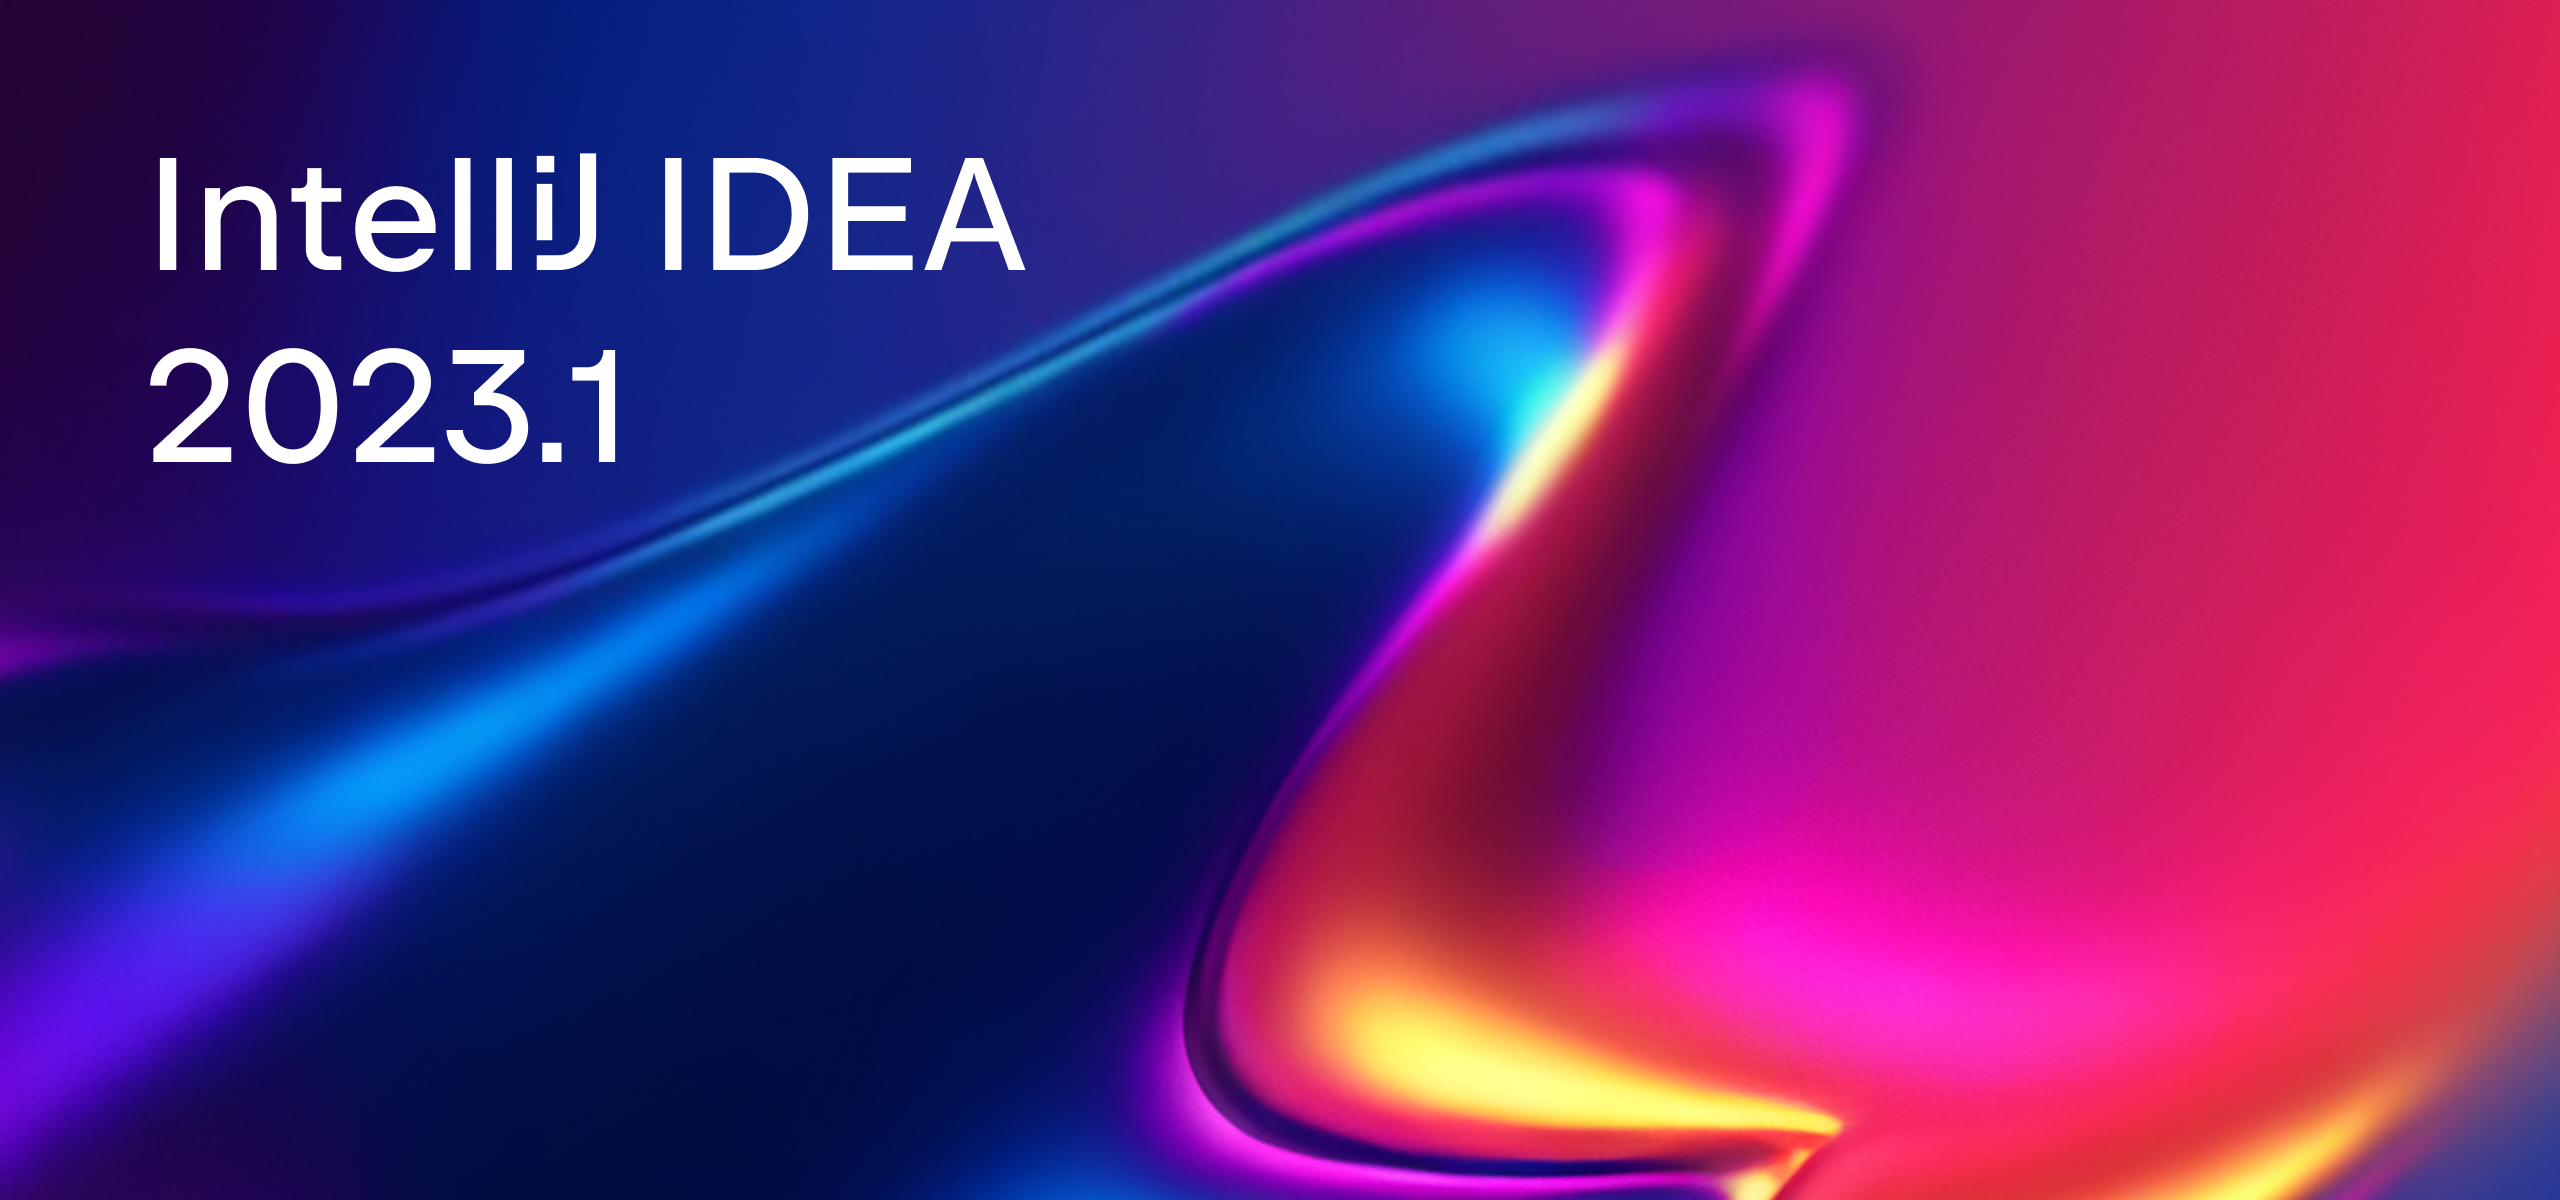 IntelliJ IDEA 2023.1 Release